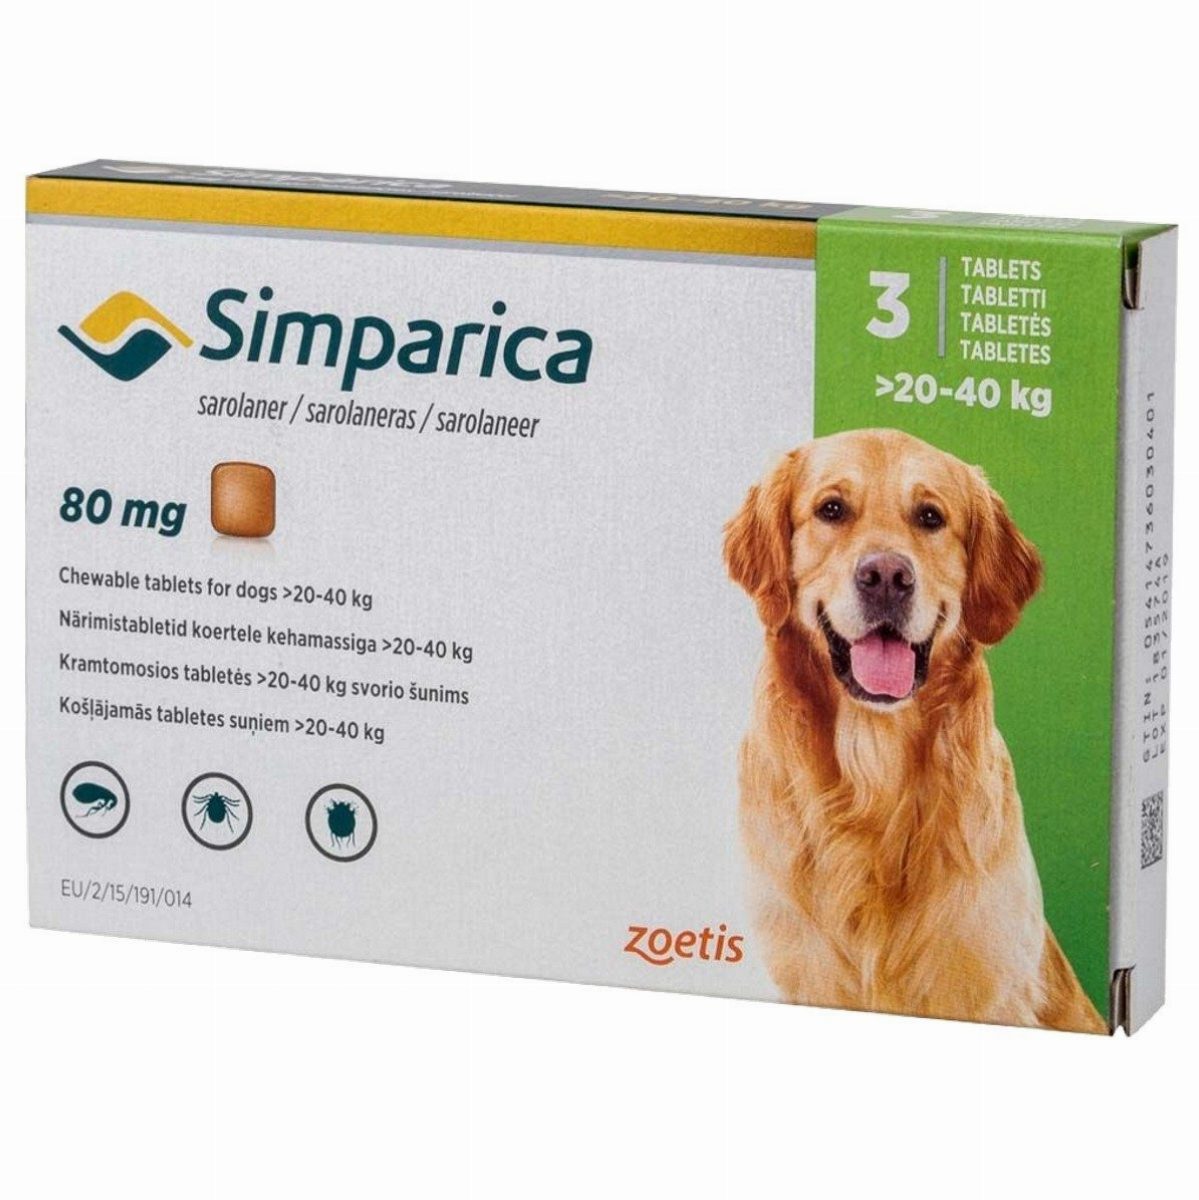 simparica-80-mg-x1-20-40kg-veterinaria-petattention